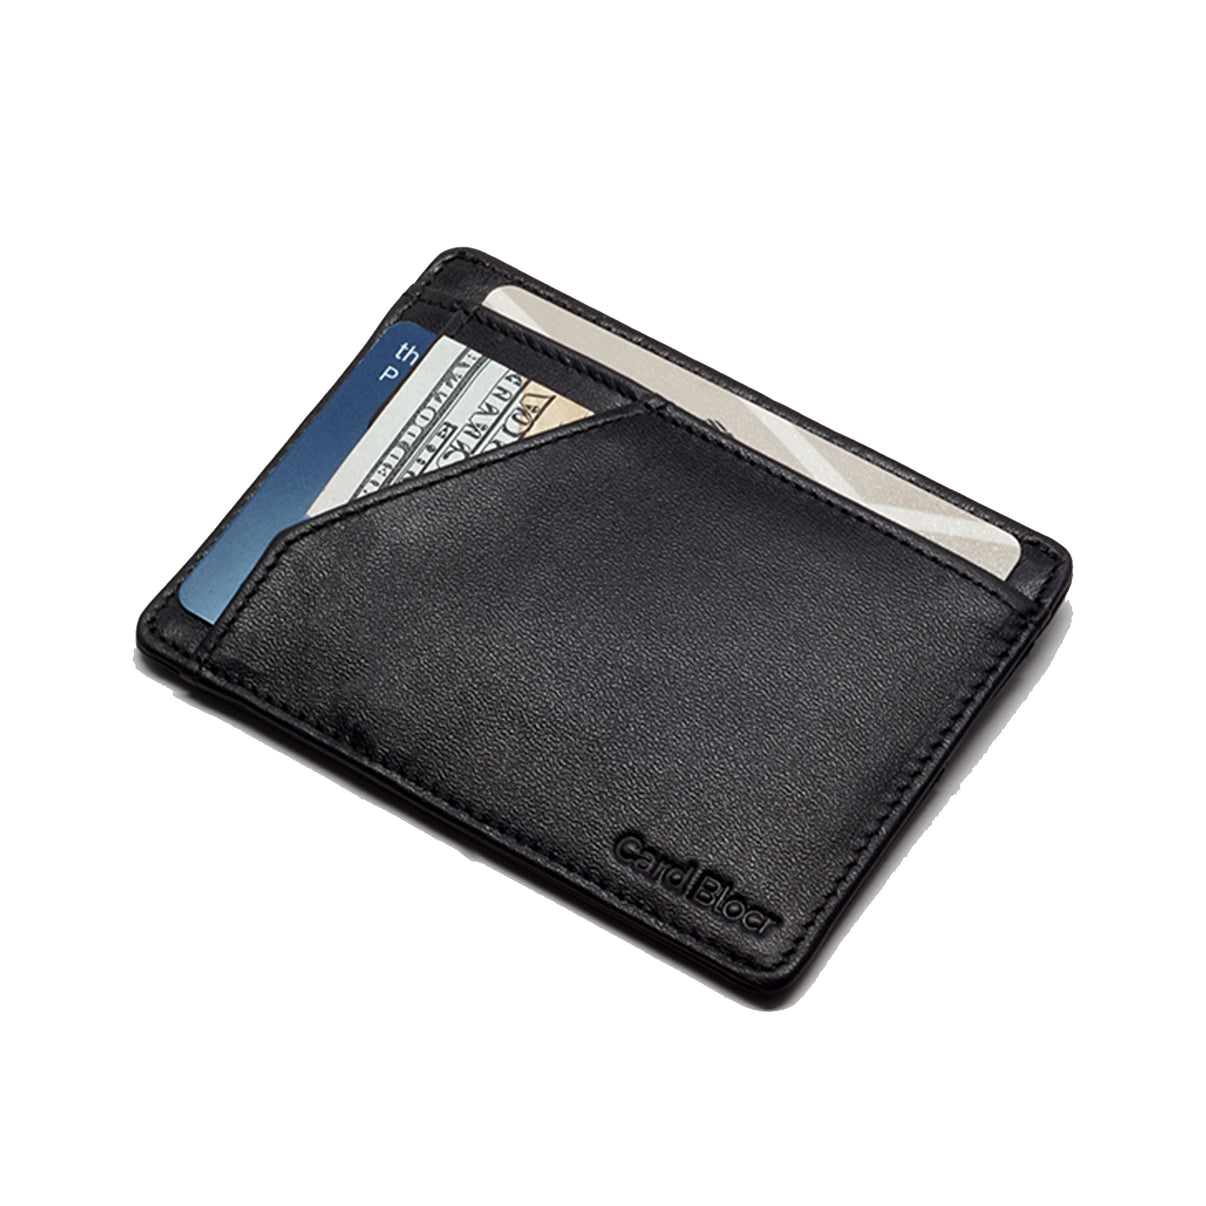 Card Blocr Minimalist Wallet in Black Leather | RFID Blocking Wallet ...